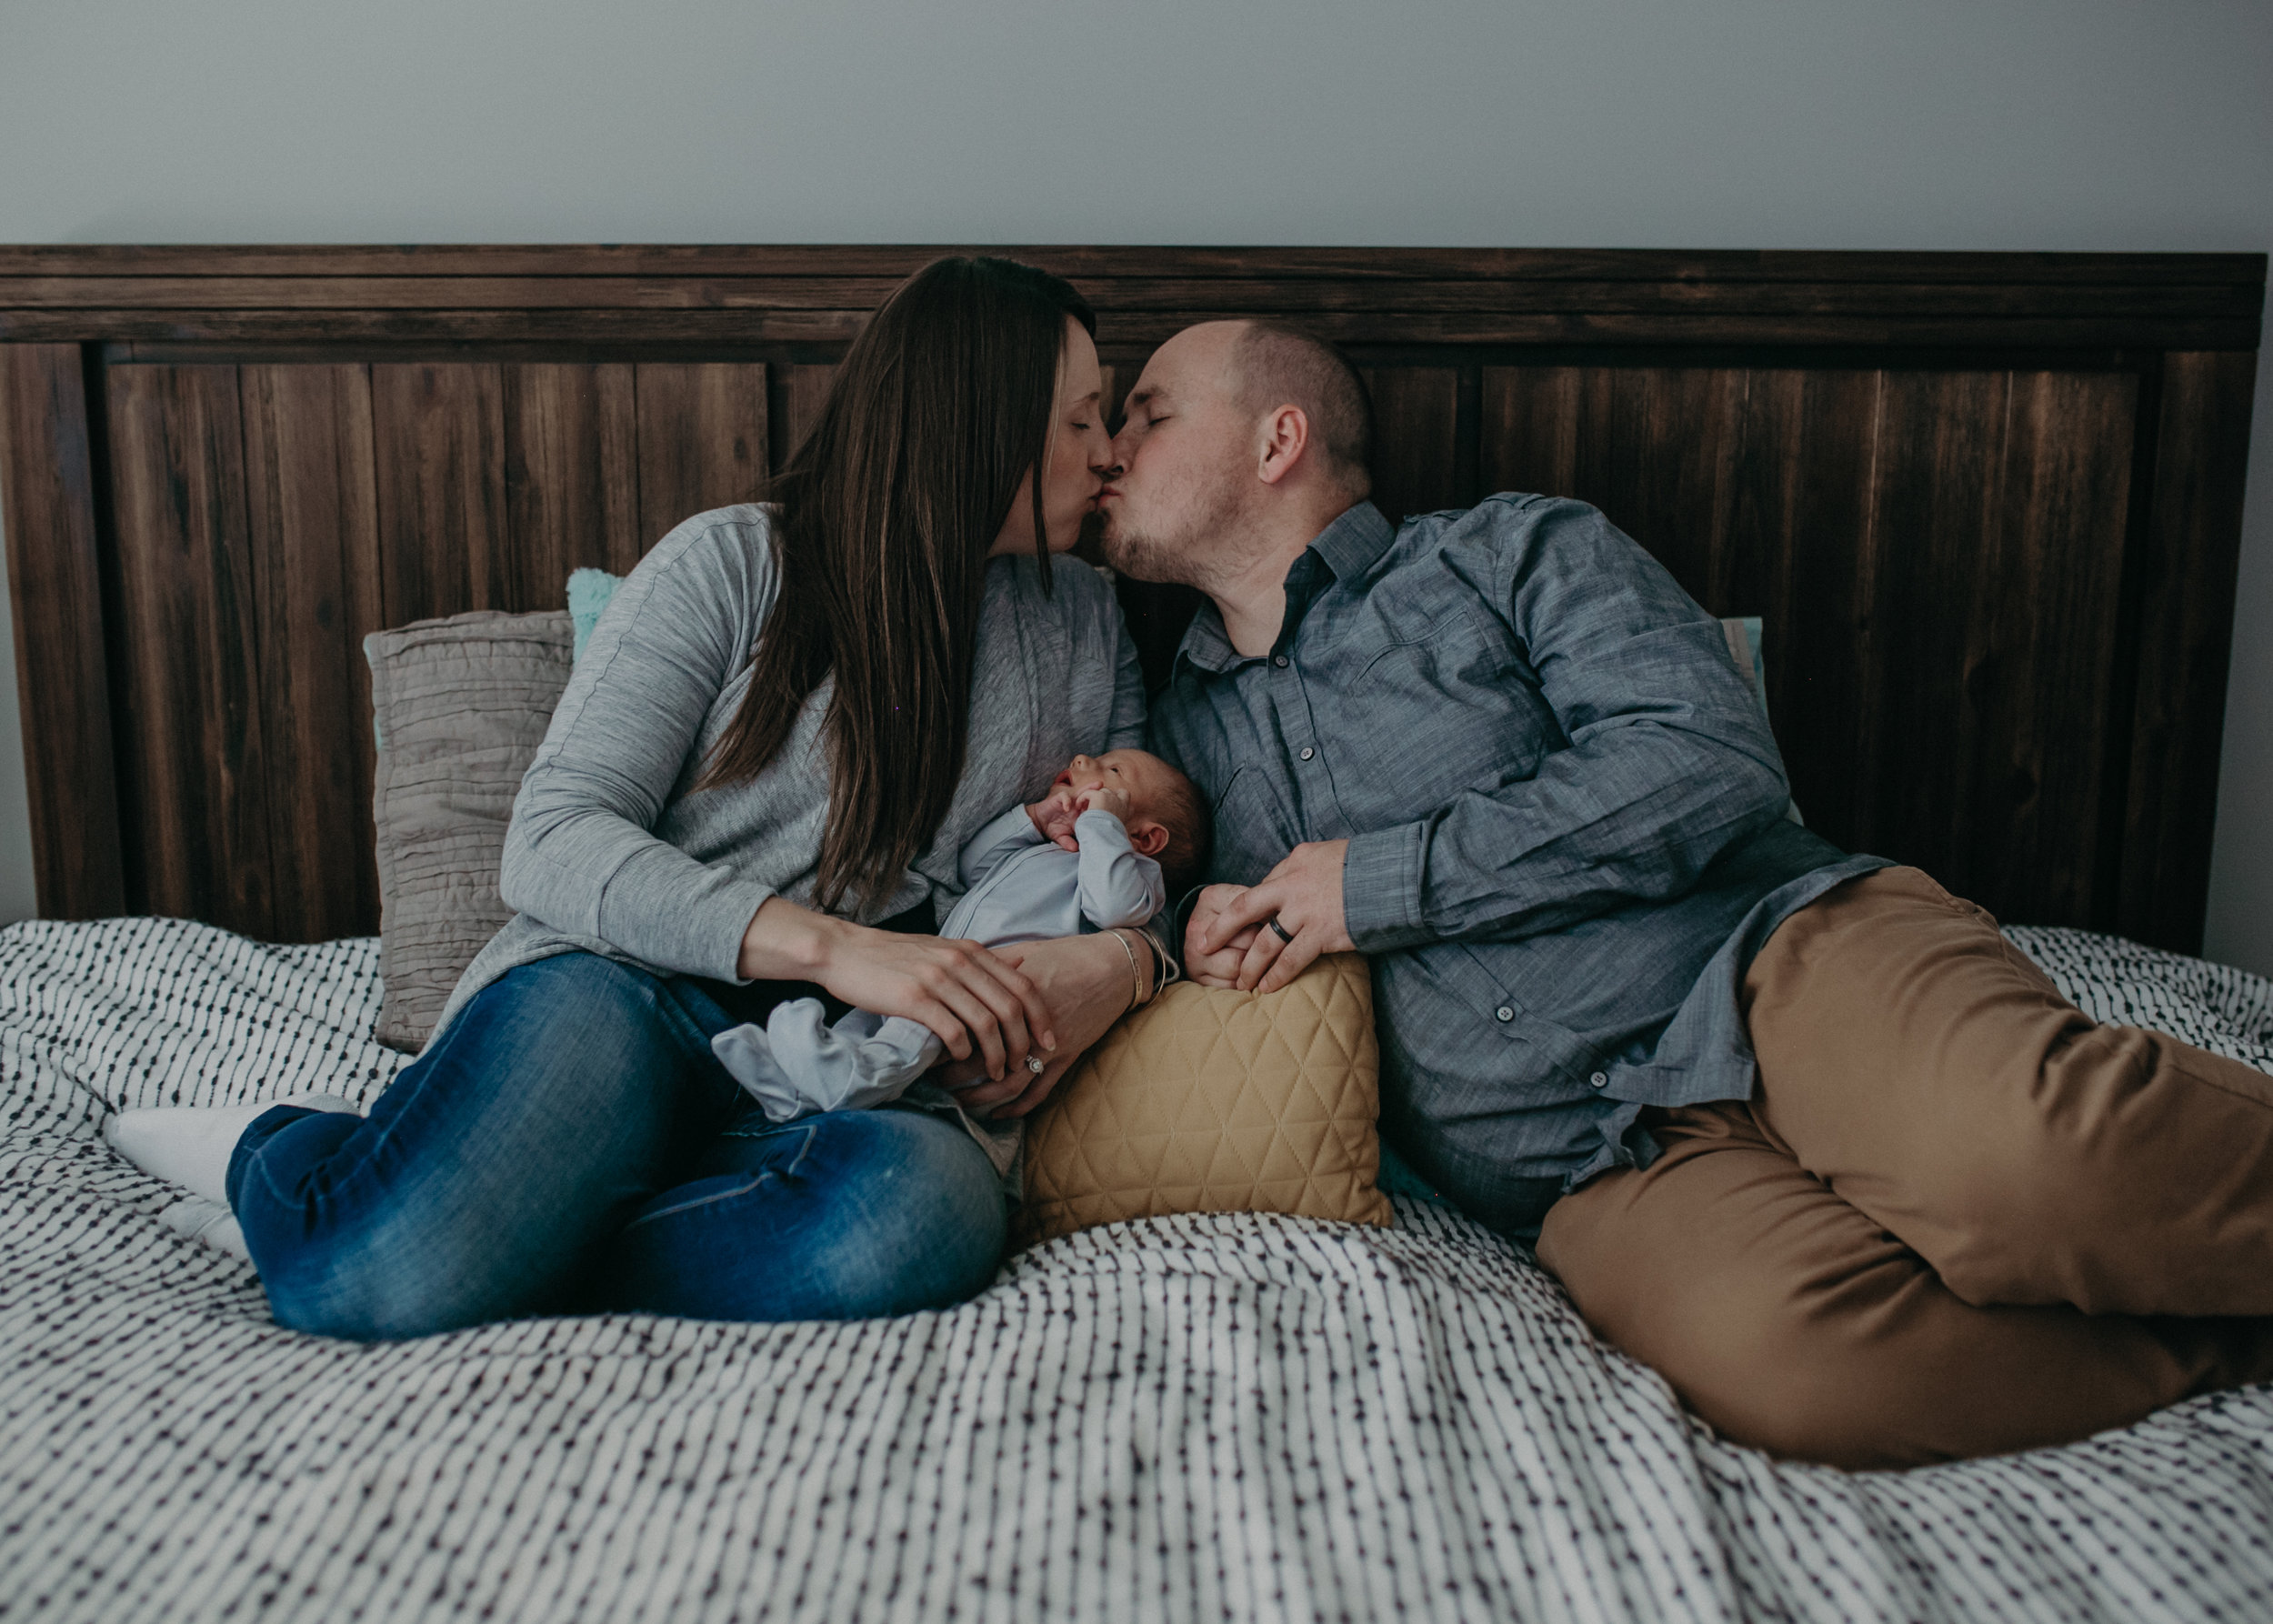  Chaska MN family kissing on bed holding newborn baby 